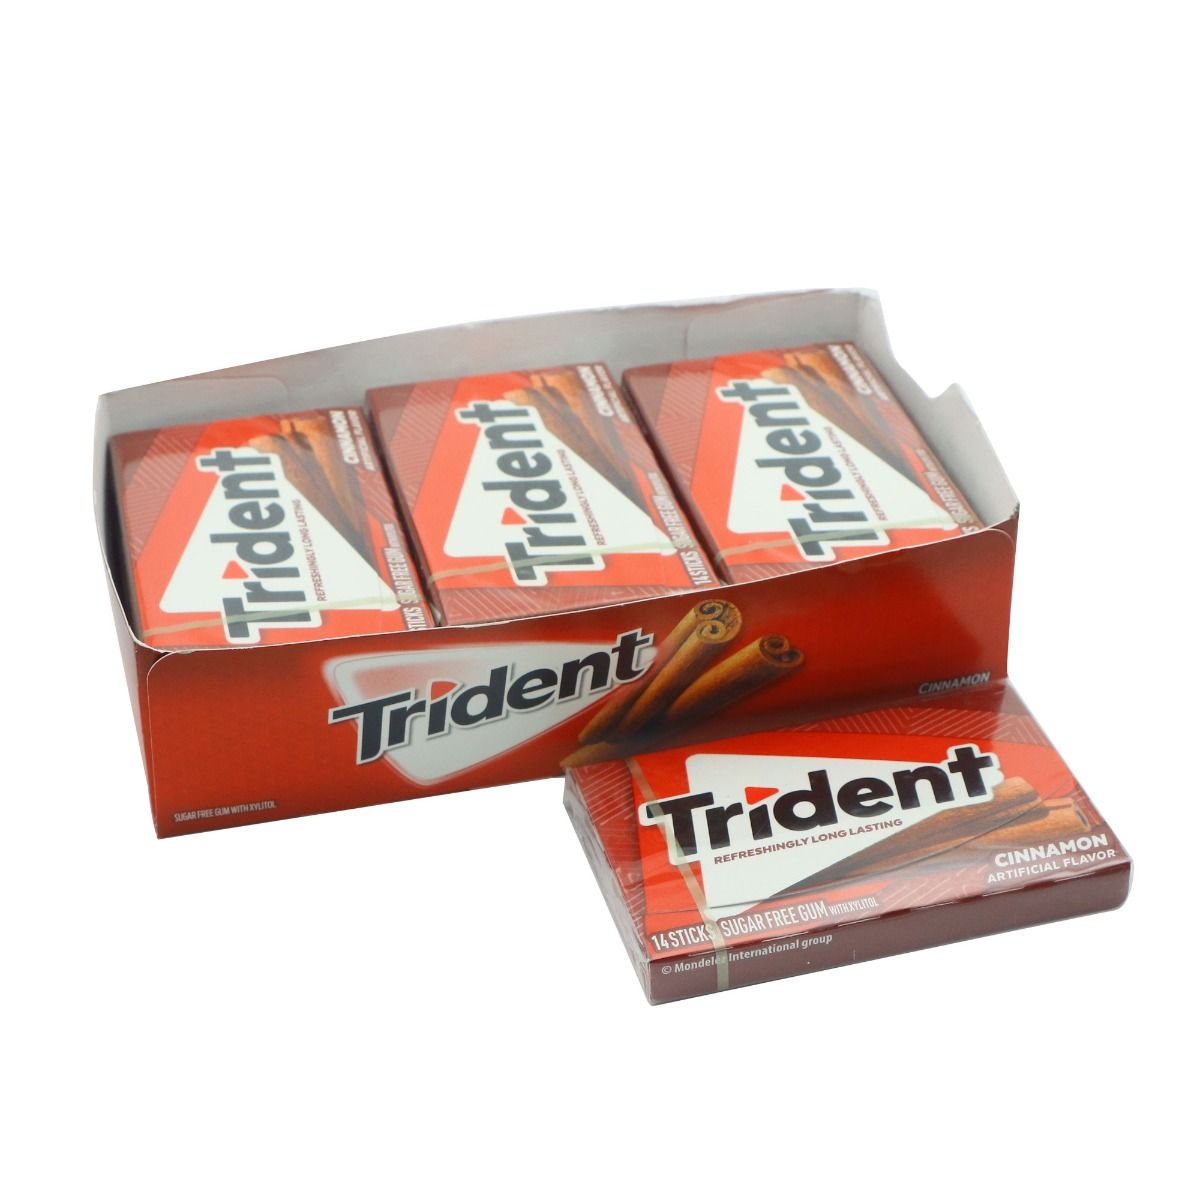 Trident Sugar Free Gum Cinnamon 14 Stick, Pack of 1 